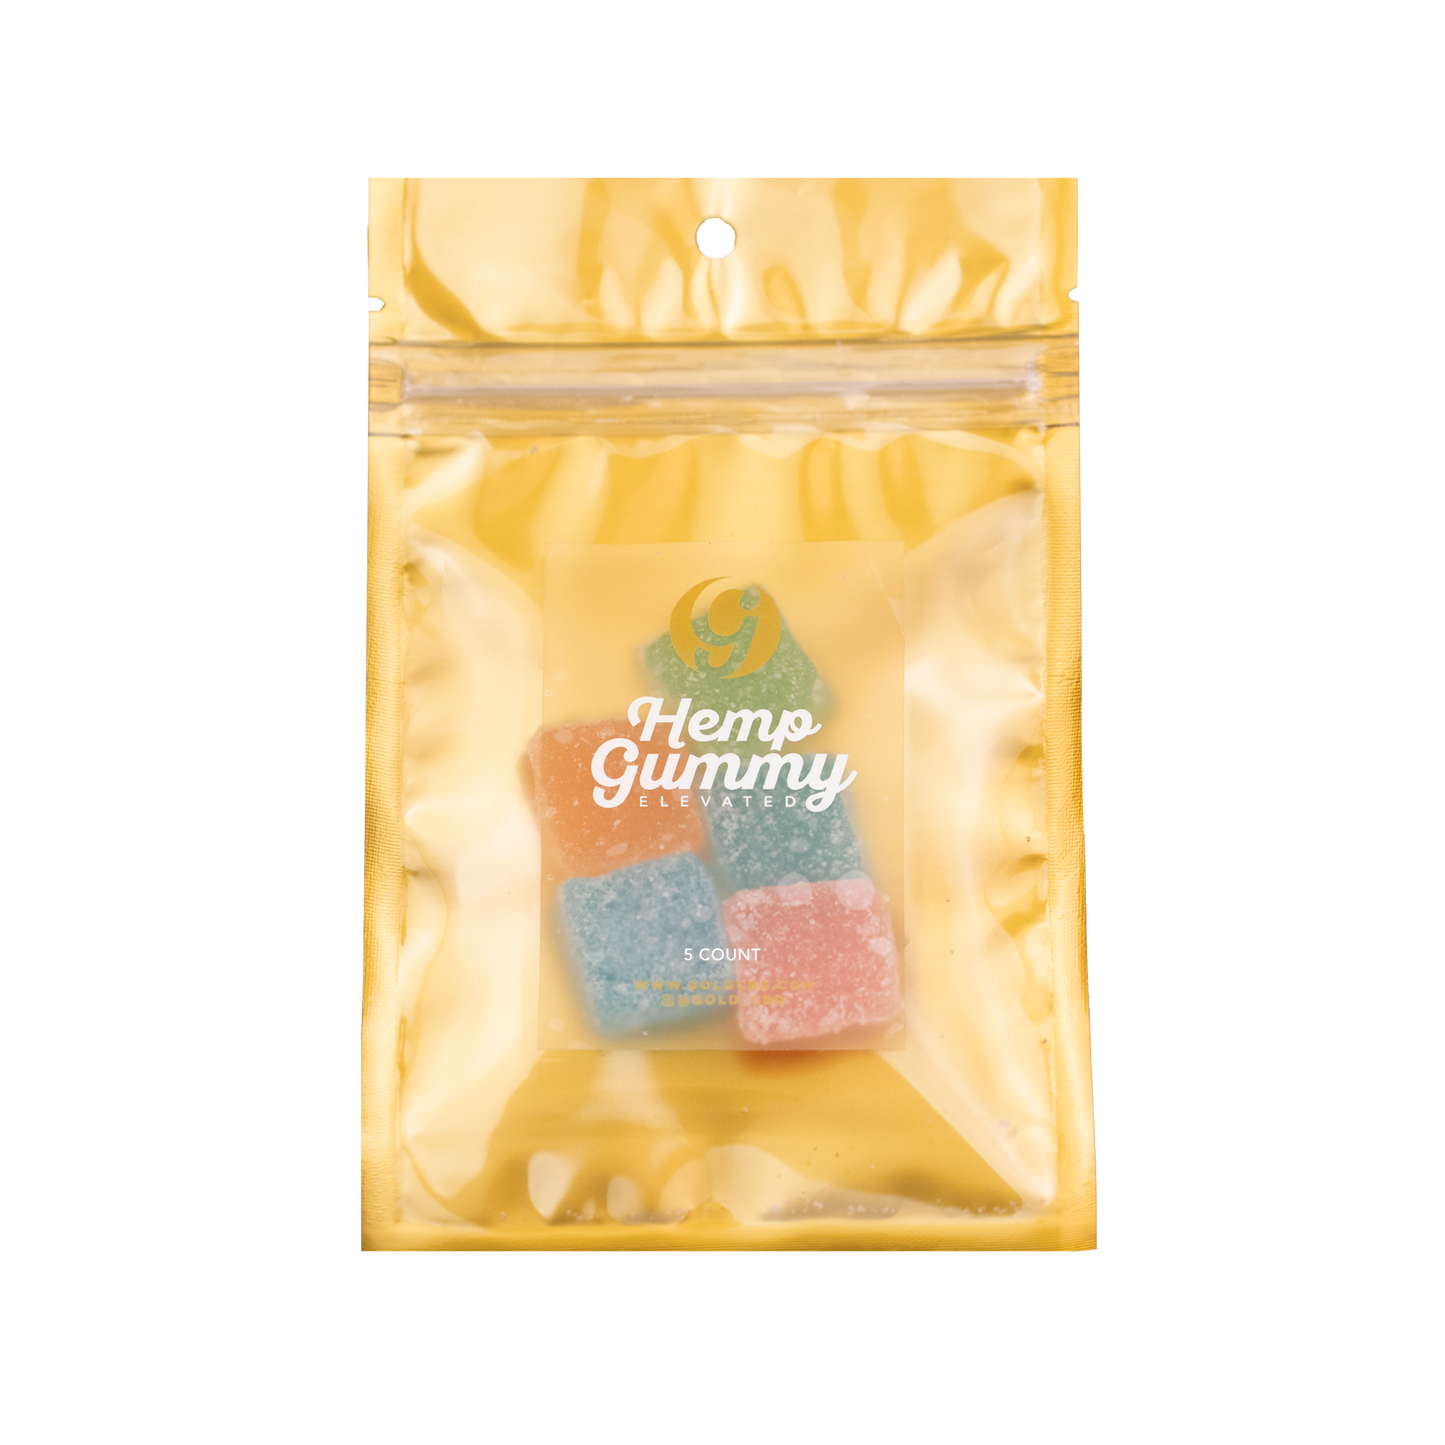 Case of 50MG Delta-8 Hemp Gummy 5 Count Bag (Qty. 12)